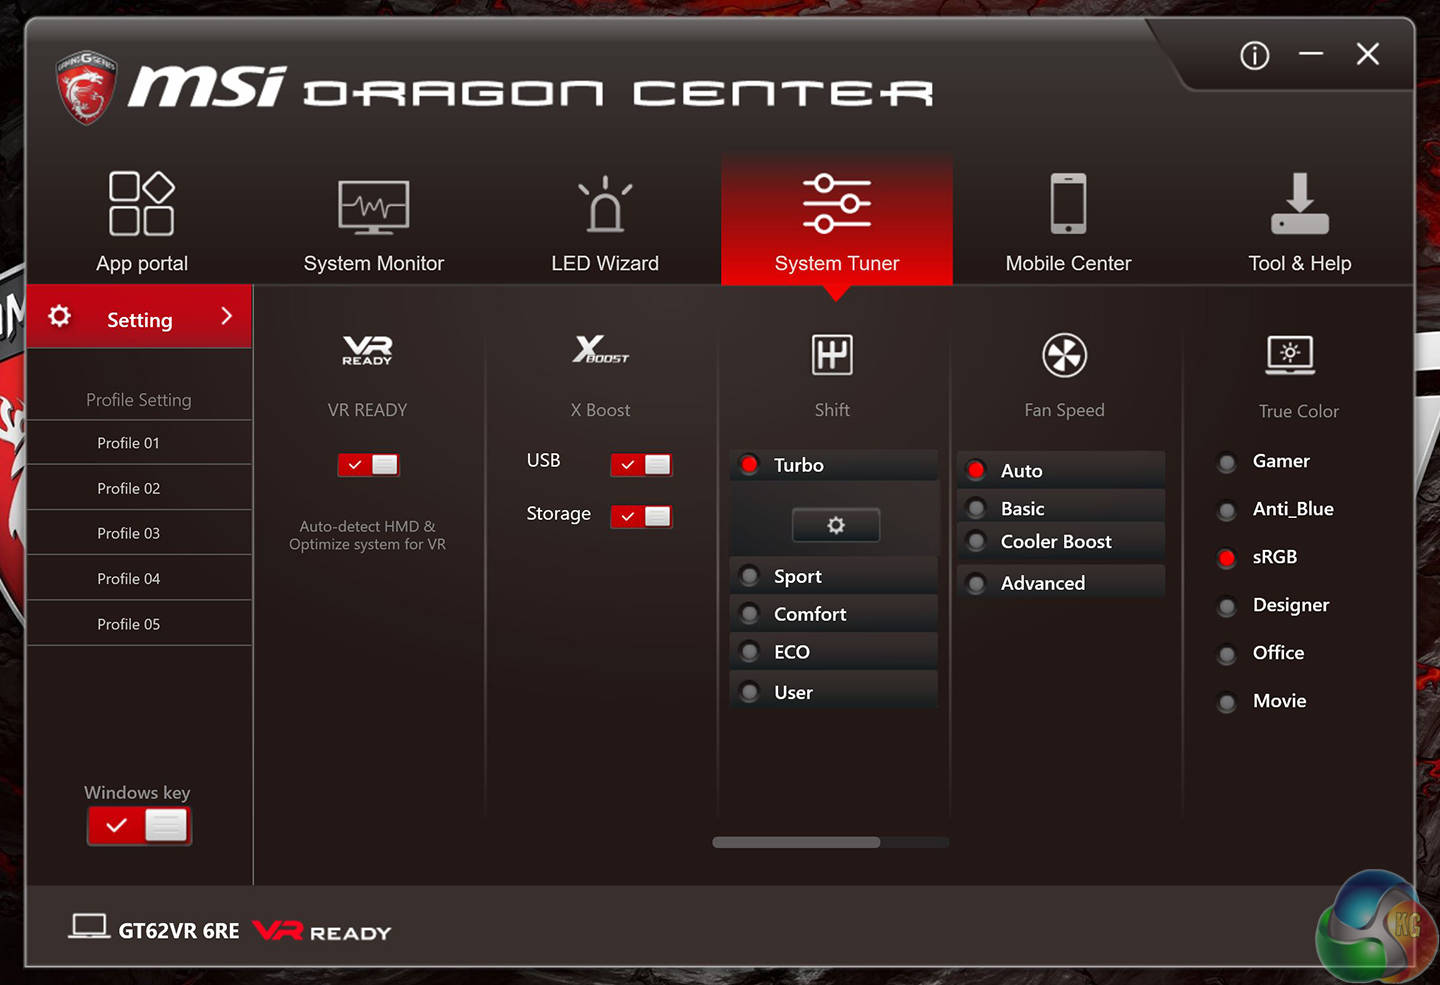 msi dragon center can